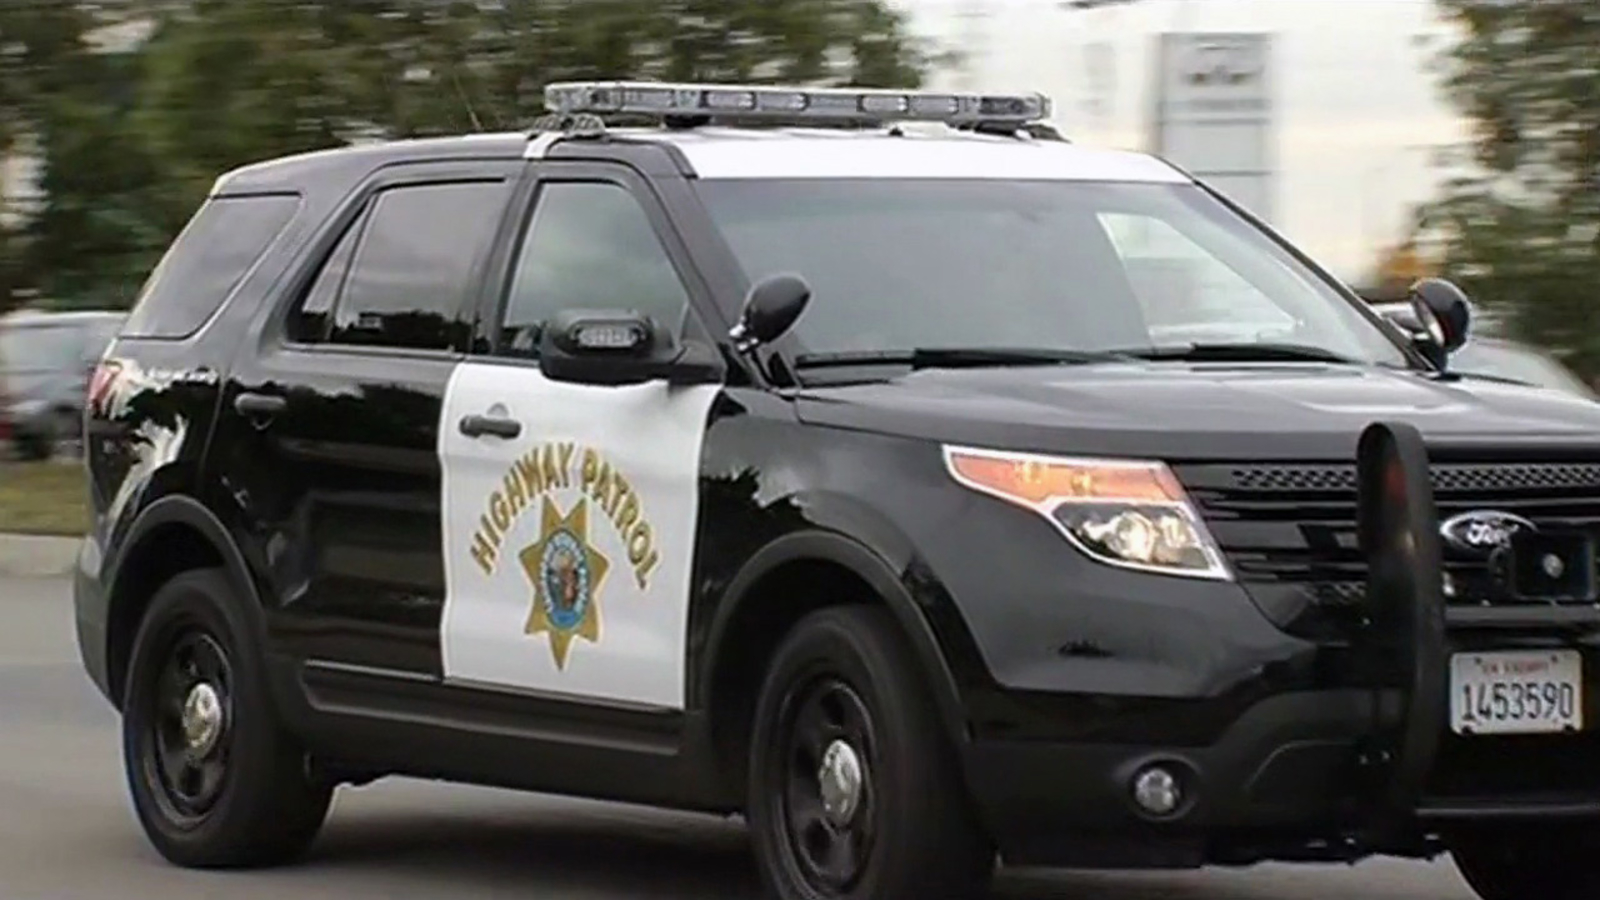 Solo car crash kills 18-year-old on I-880 in San Jose